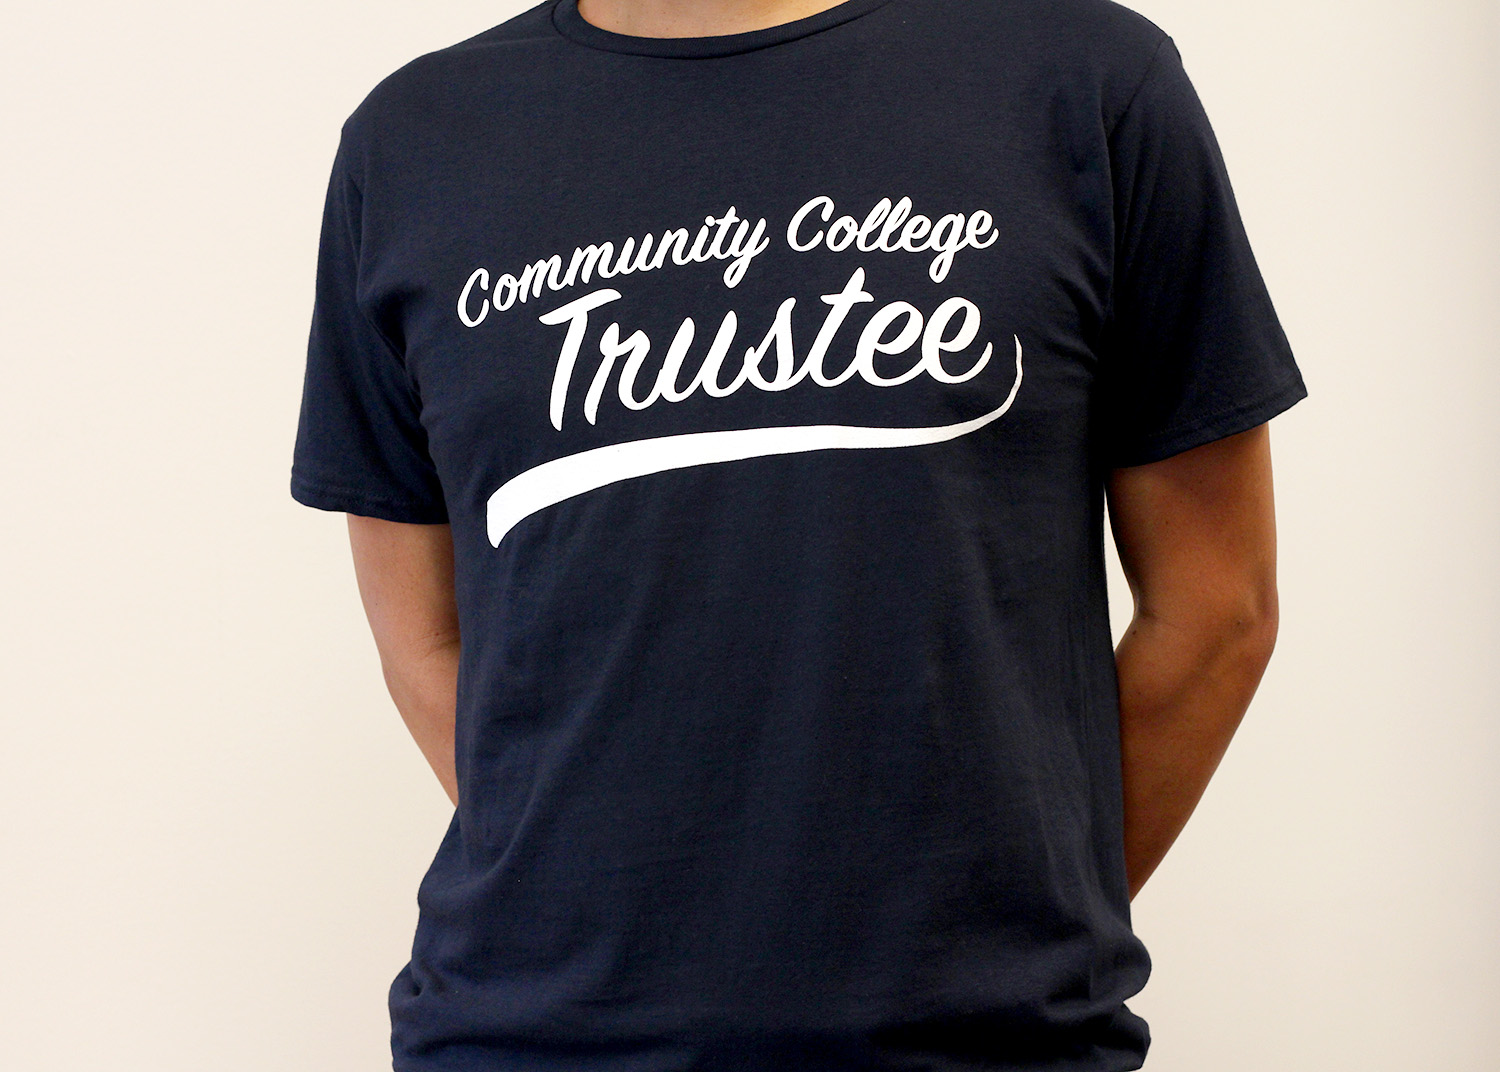 Unisex ACCT Community College Trustee Tee Shirt - Size XXL